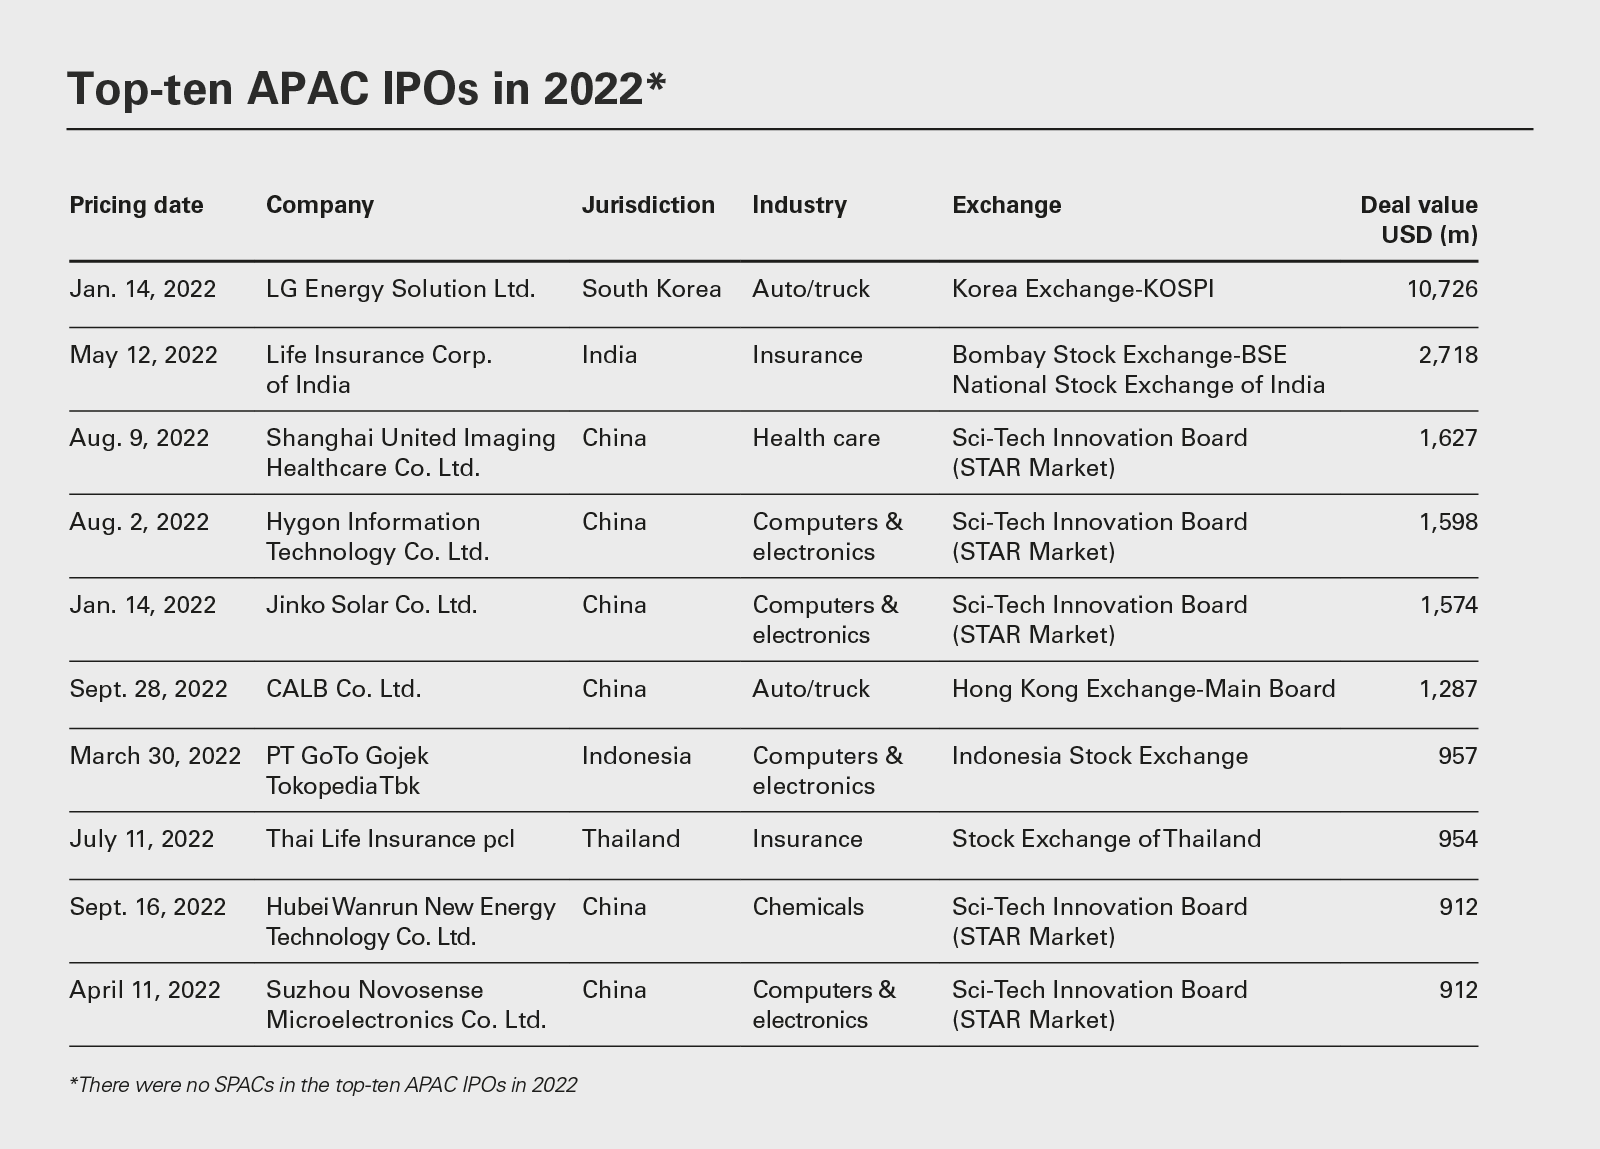 Top-ten APAC IPOS globally in 2022*